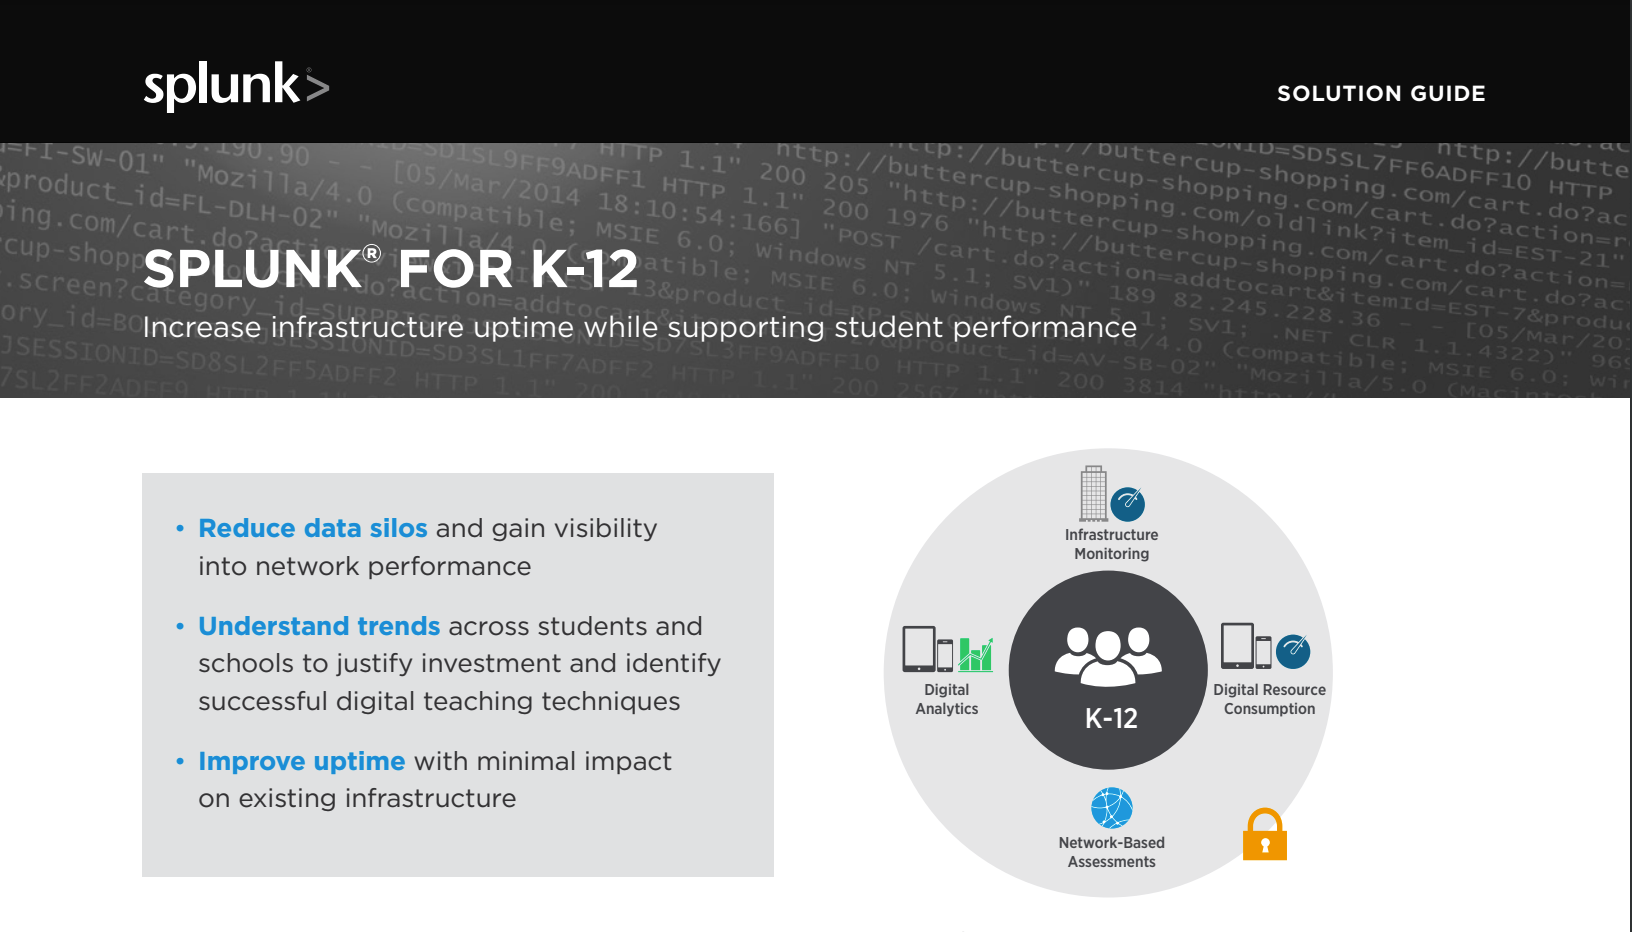 Splunk solution for K12 schools